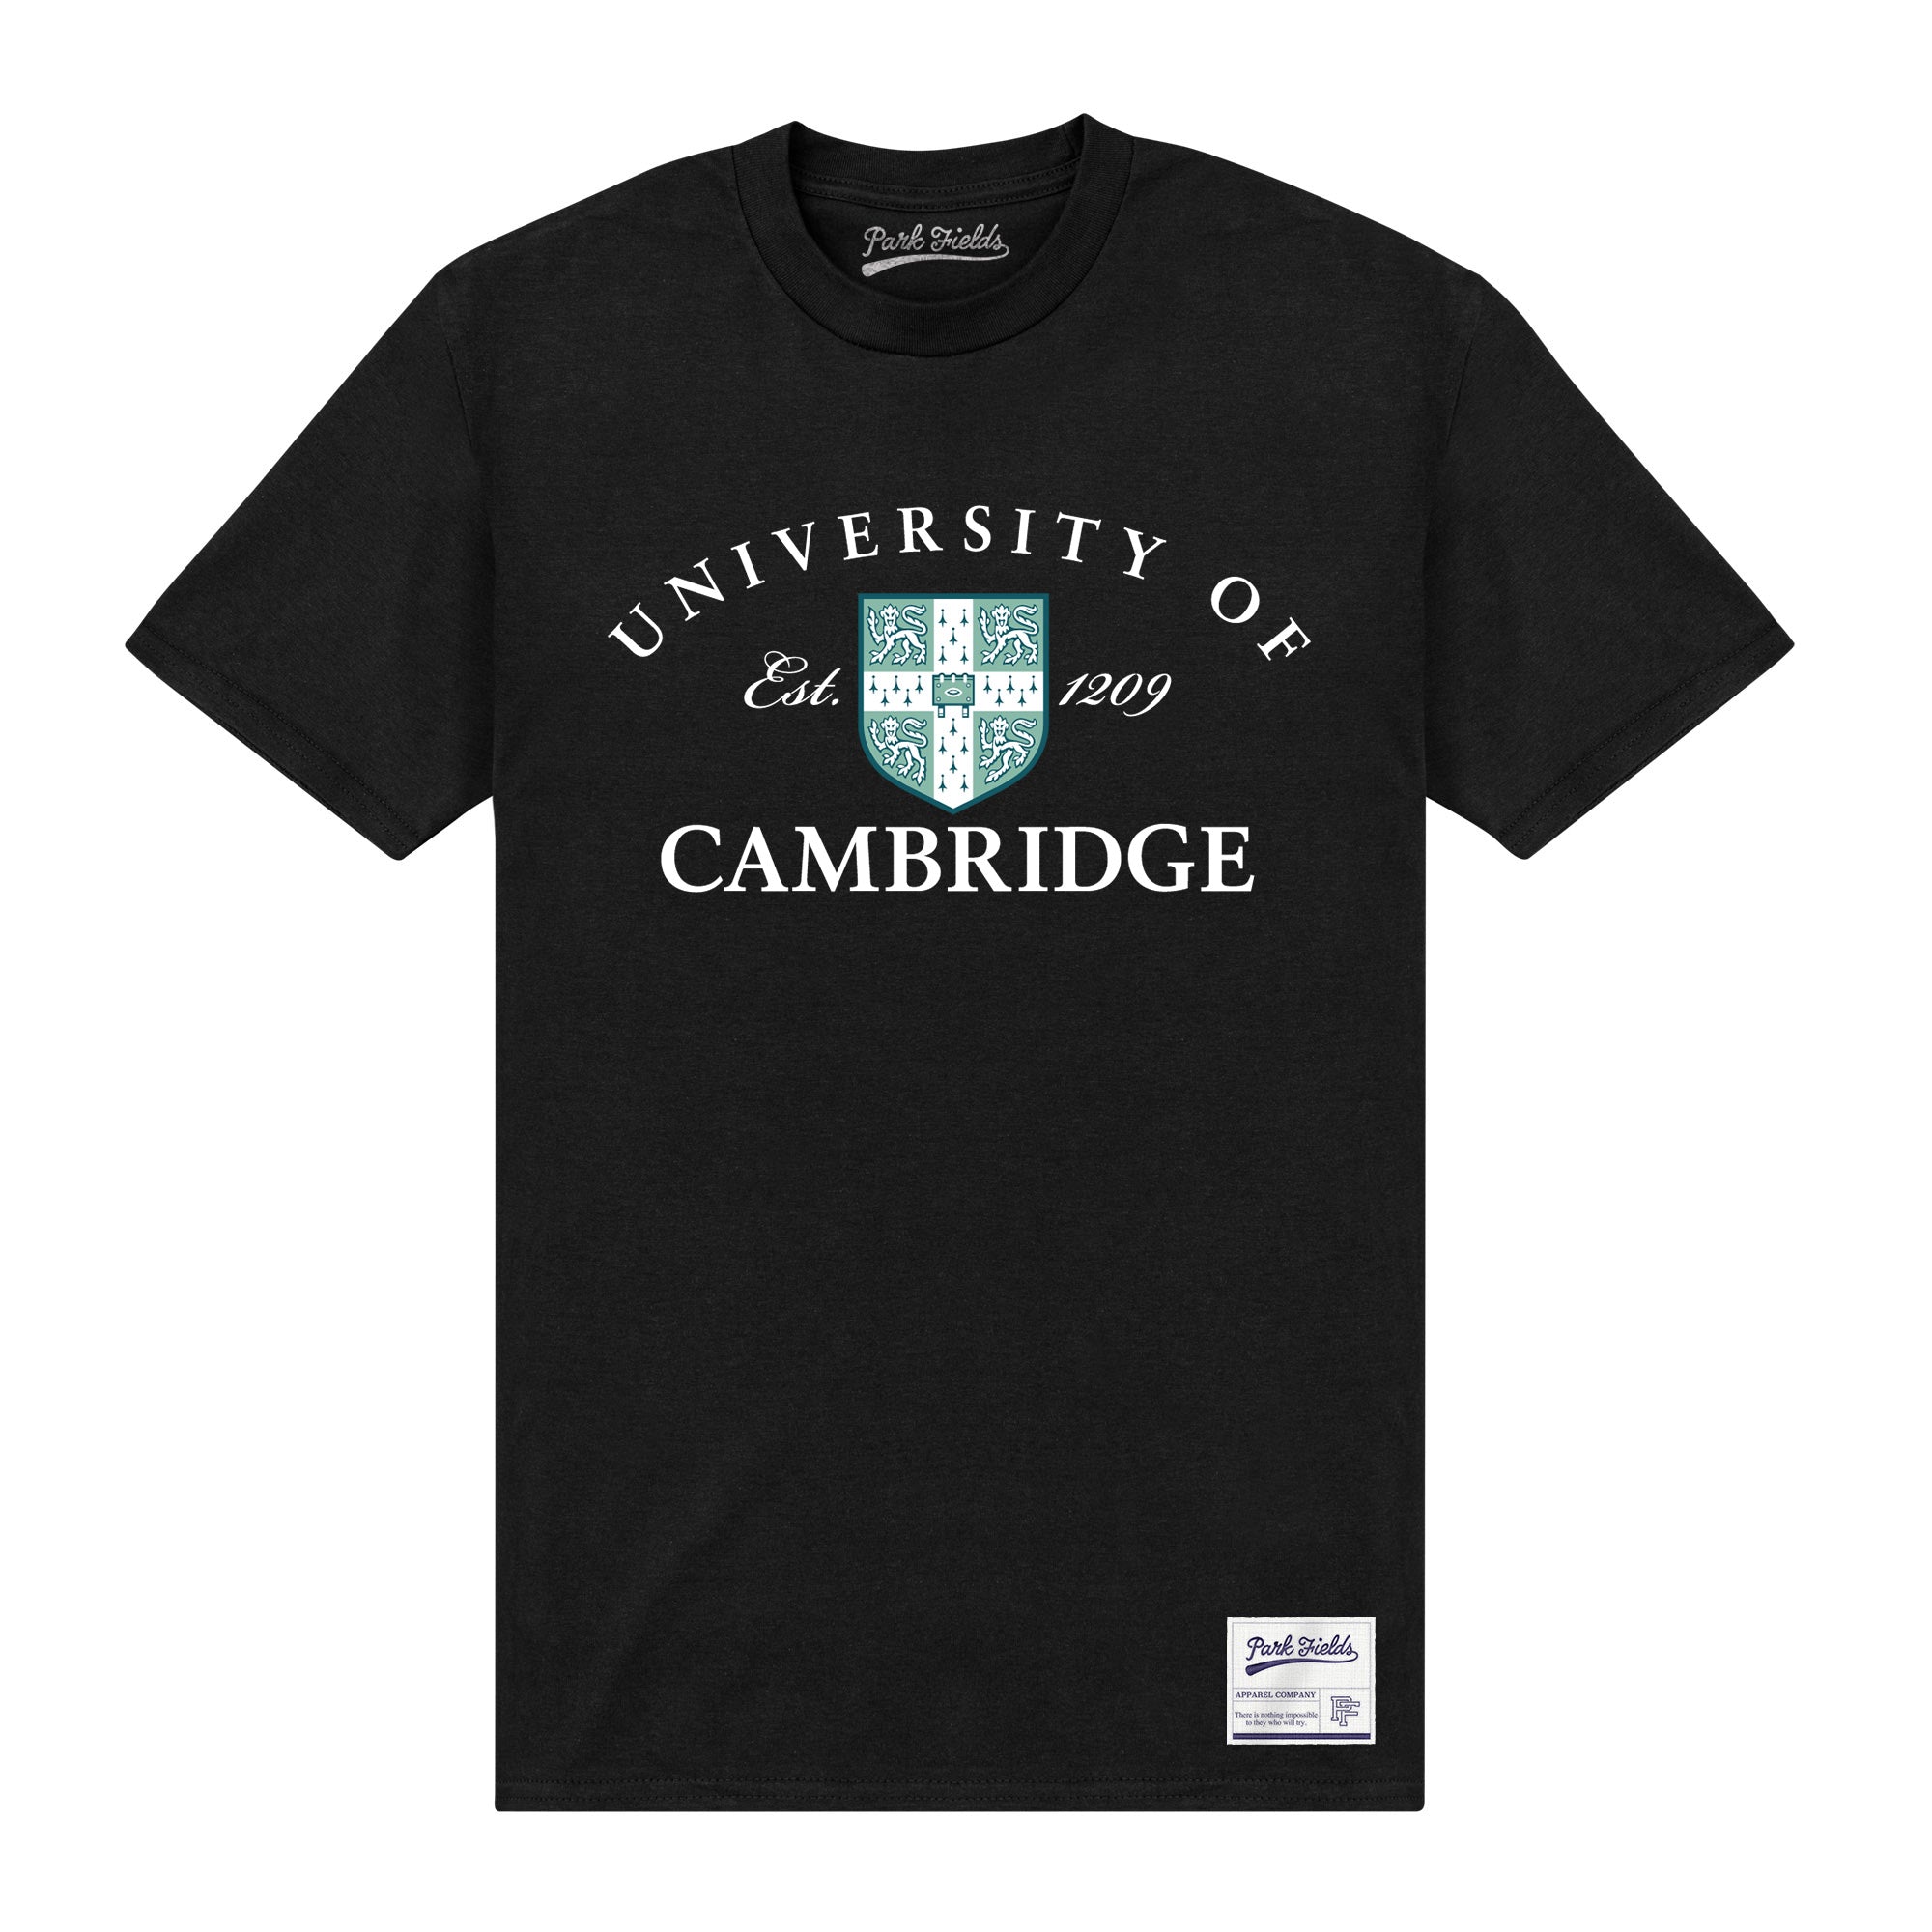 University Of Cambridge Est 1209 Black T-Shirt